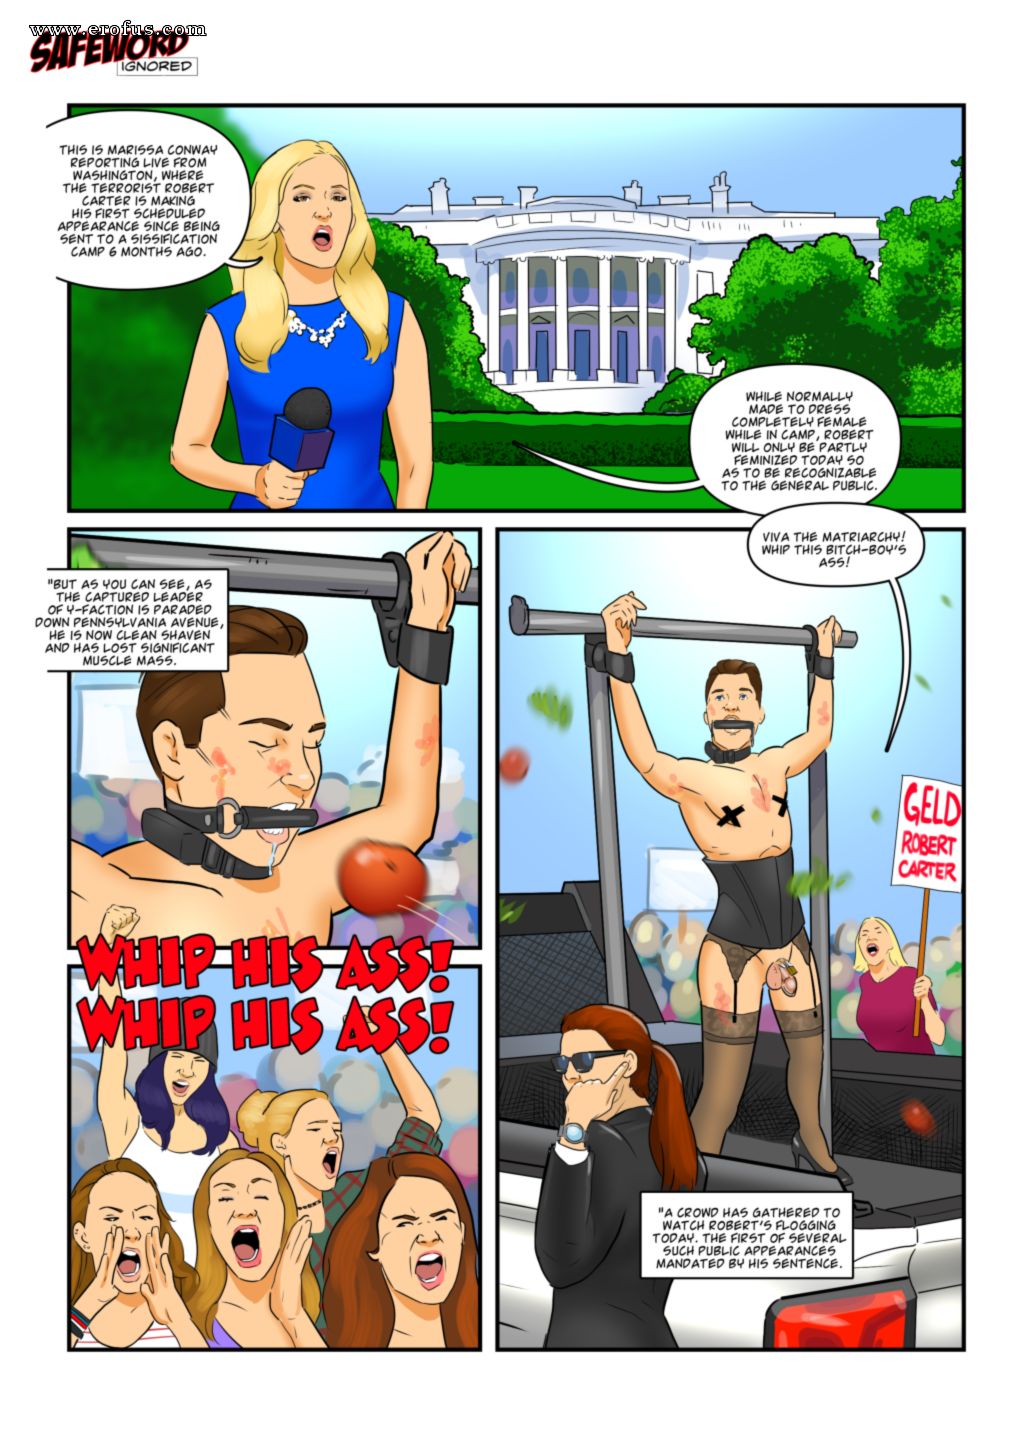 Porn comics in Washington